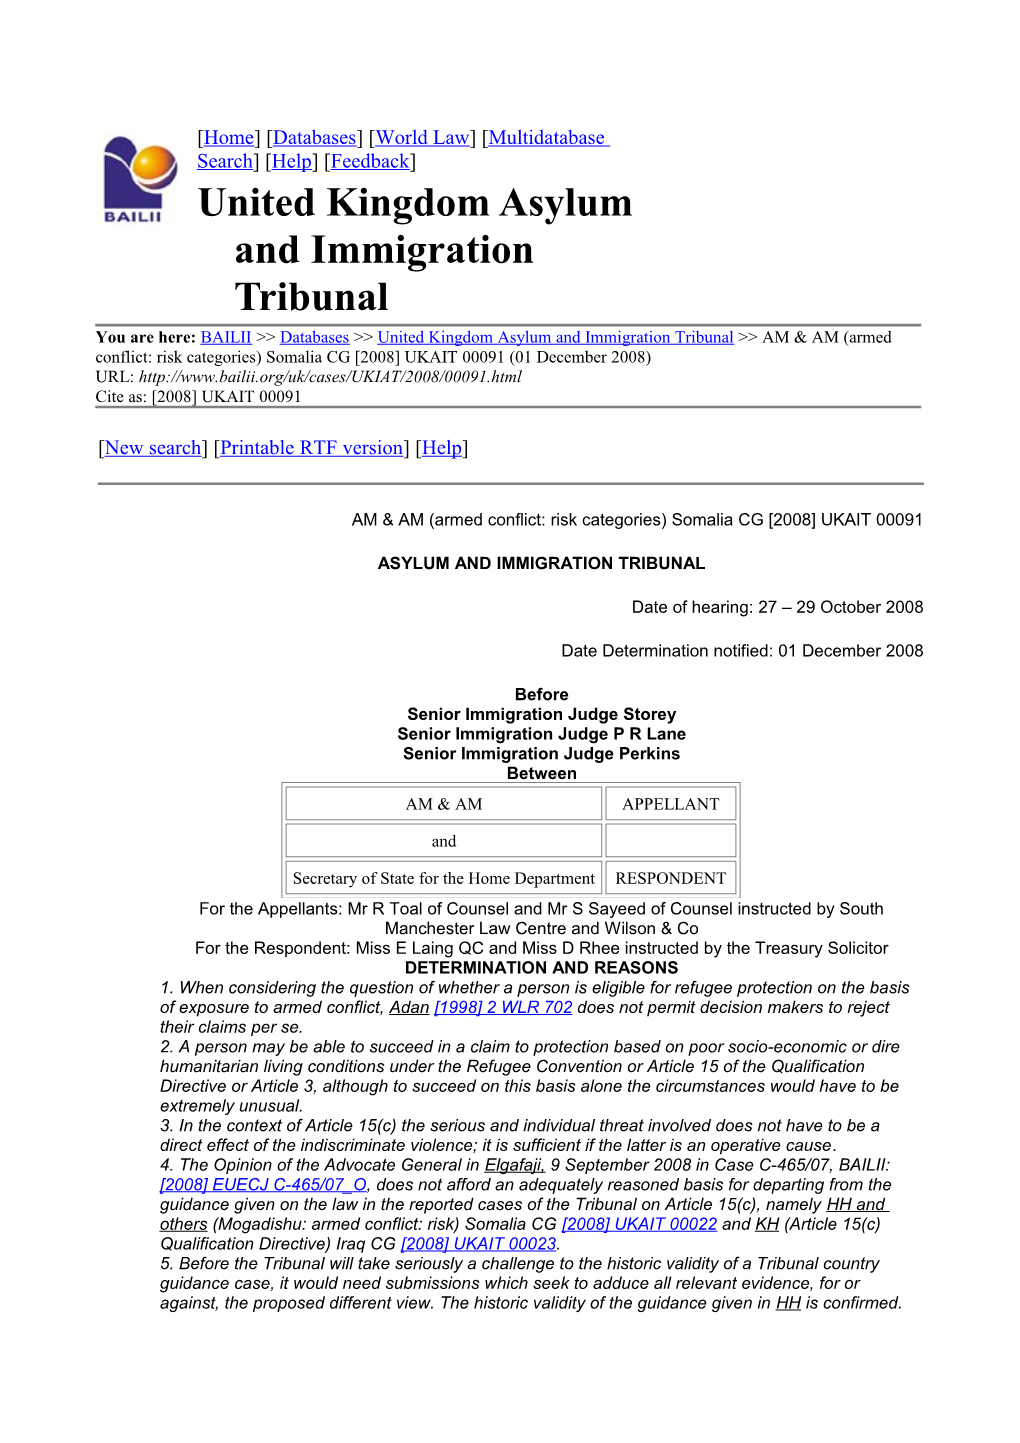 United Kingdom Asylum and Immigration Tribunal